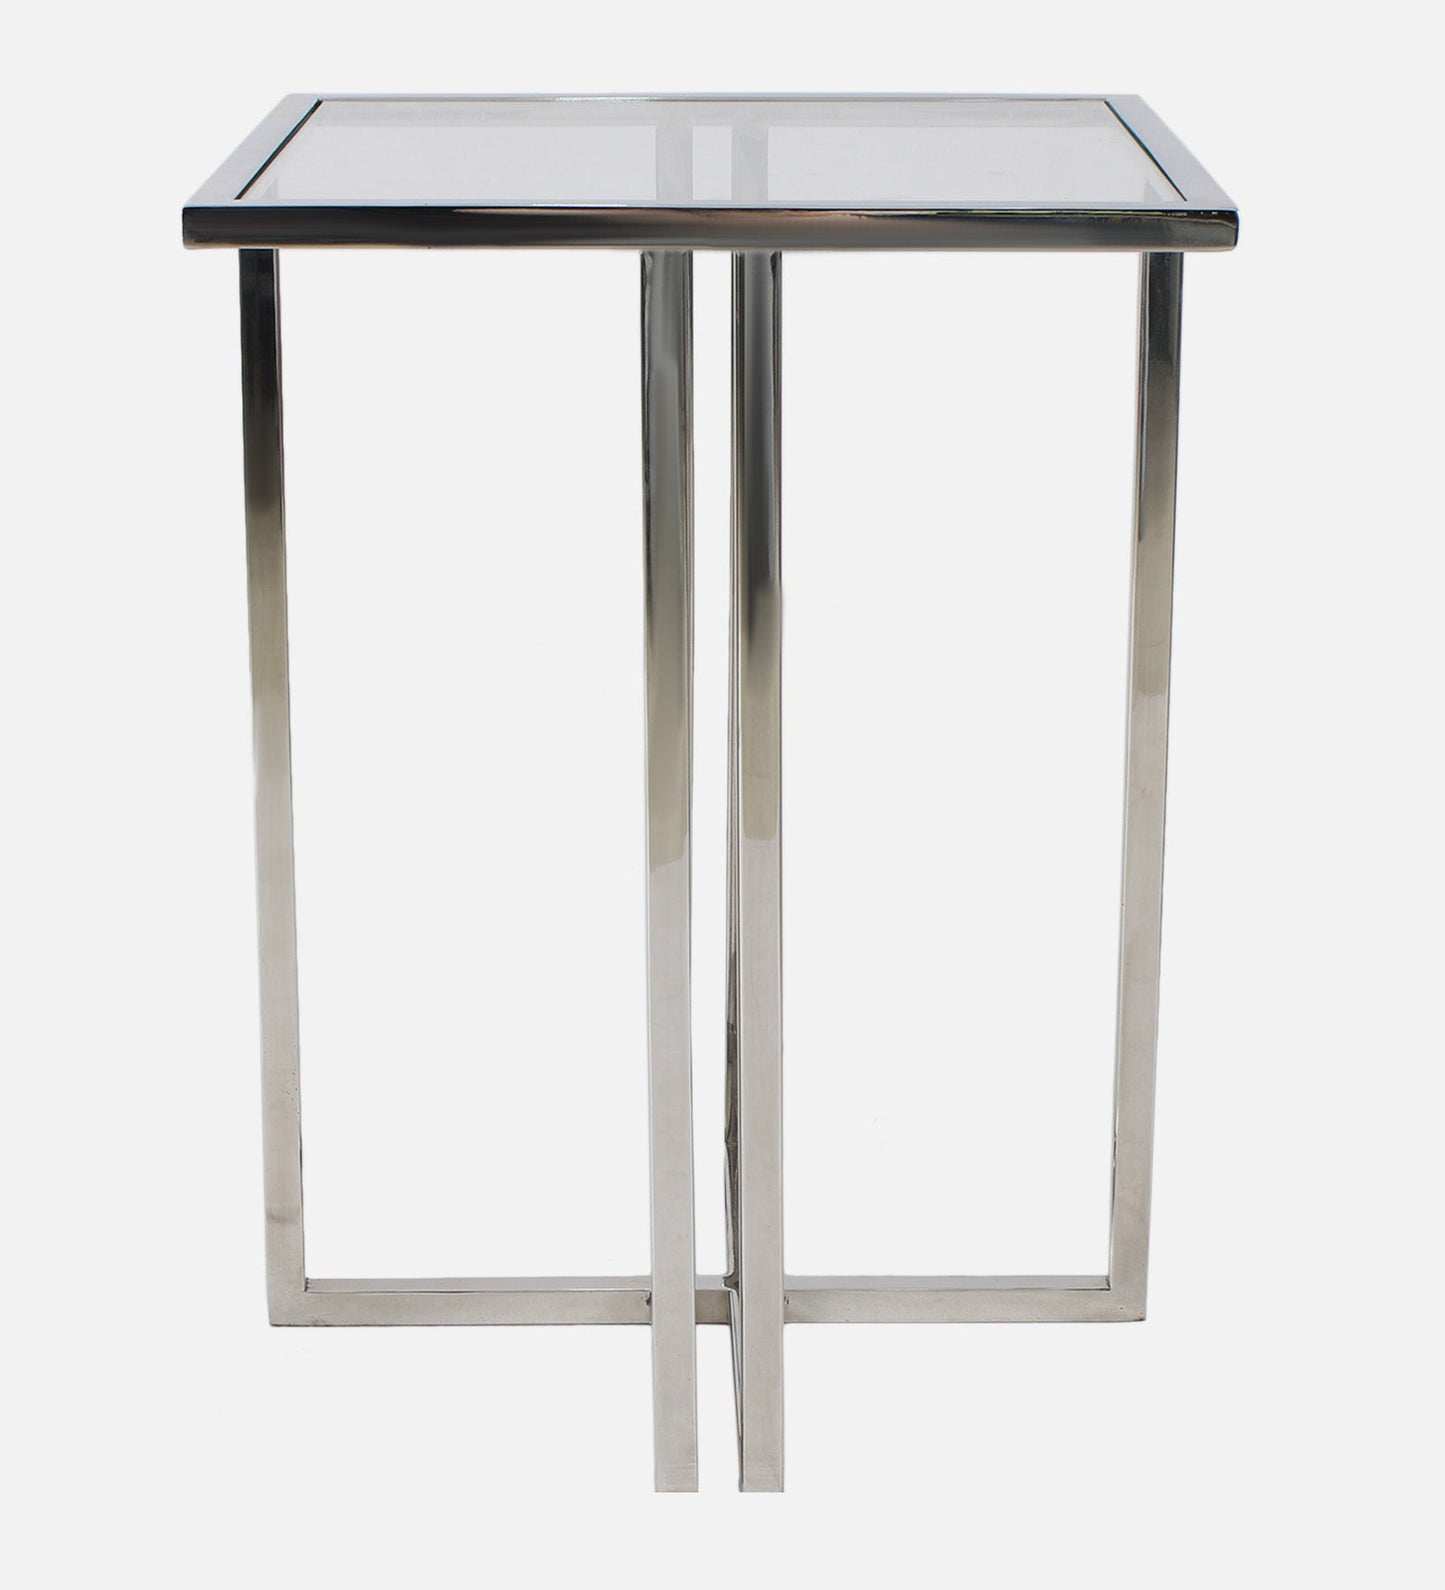 Meranti Glass Side Table In Chrome Finish